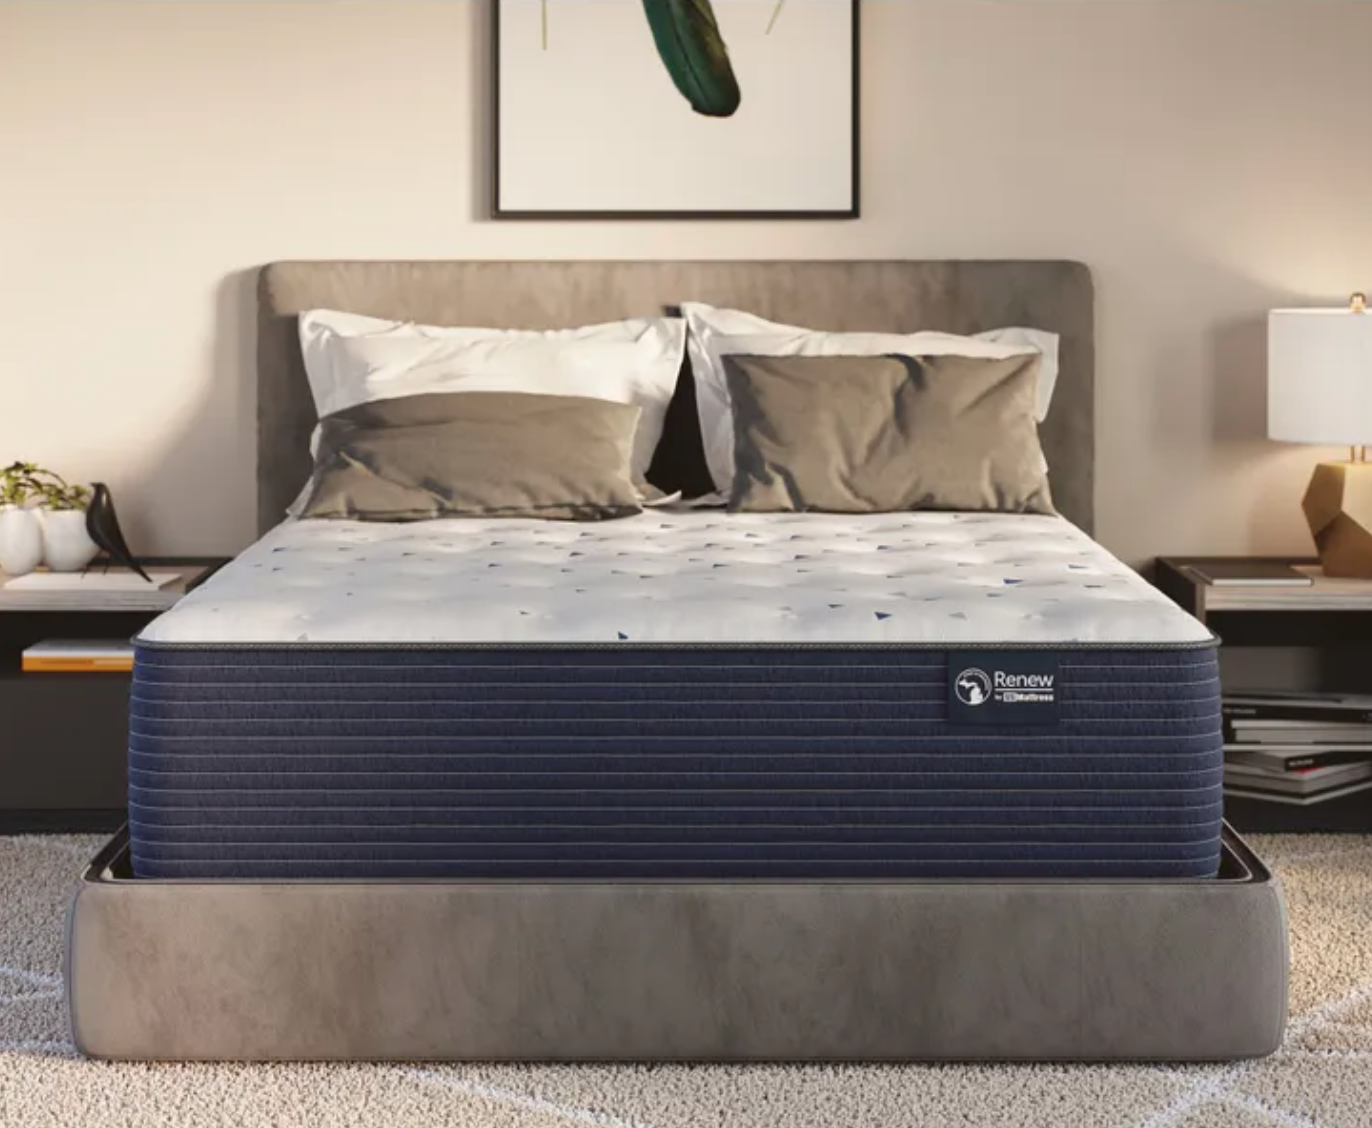 renew performance mattress king size